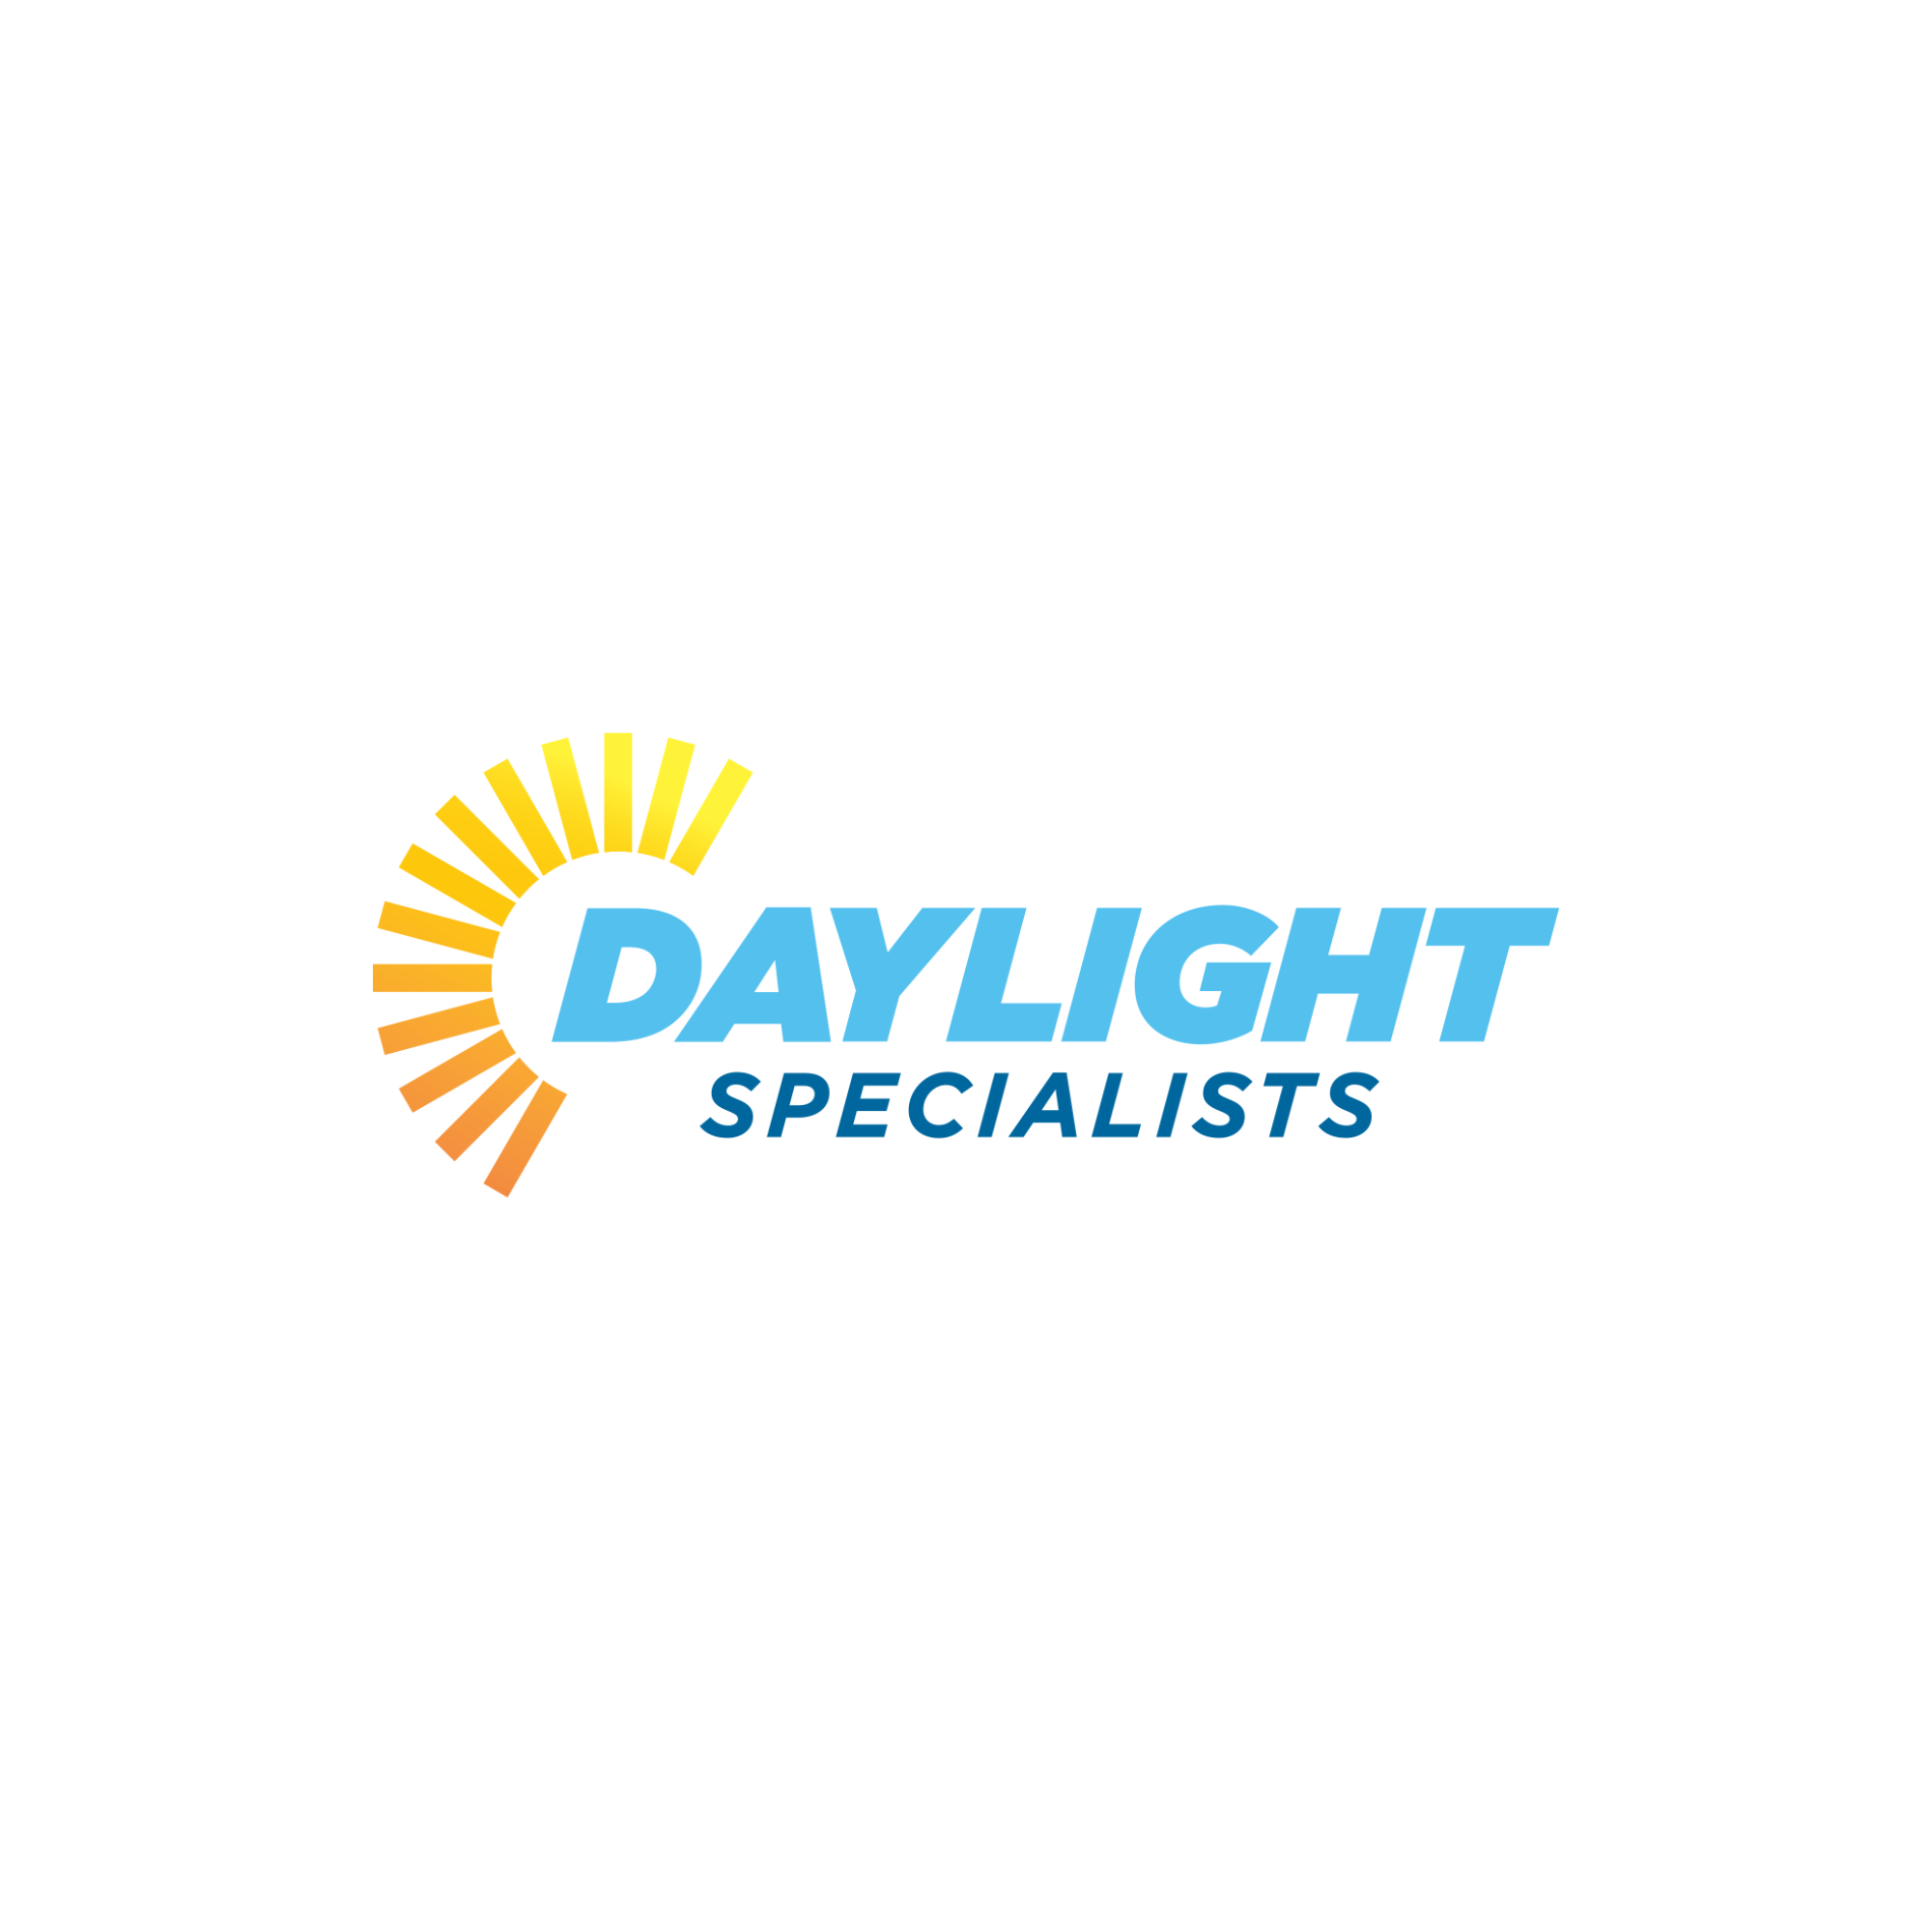 (c) Daylightspecialists.com